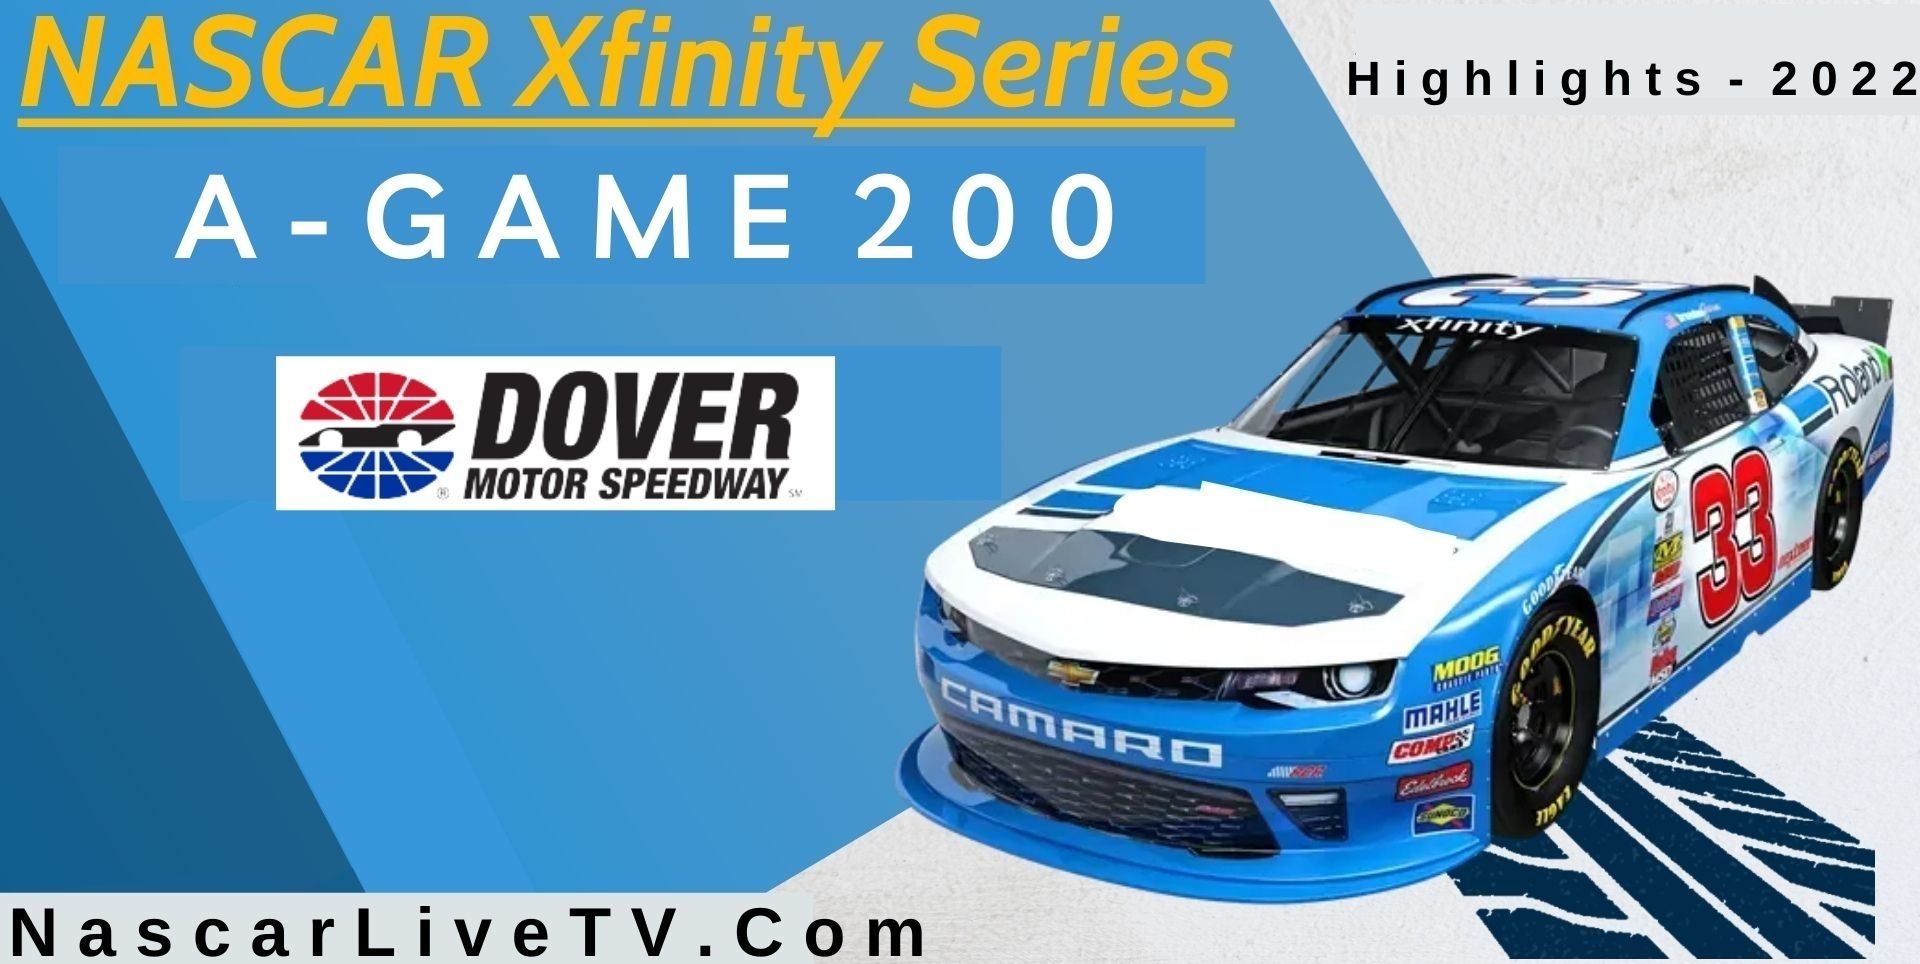 A GAME 200 Highlights Nascar Xfinity Series 2022